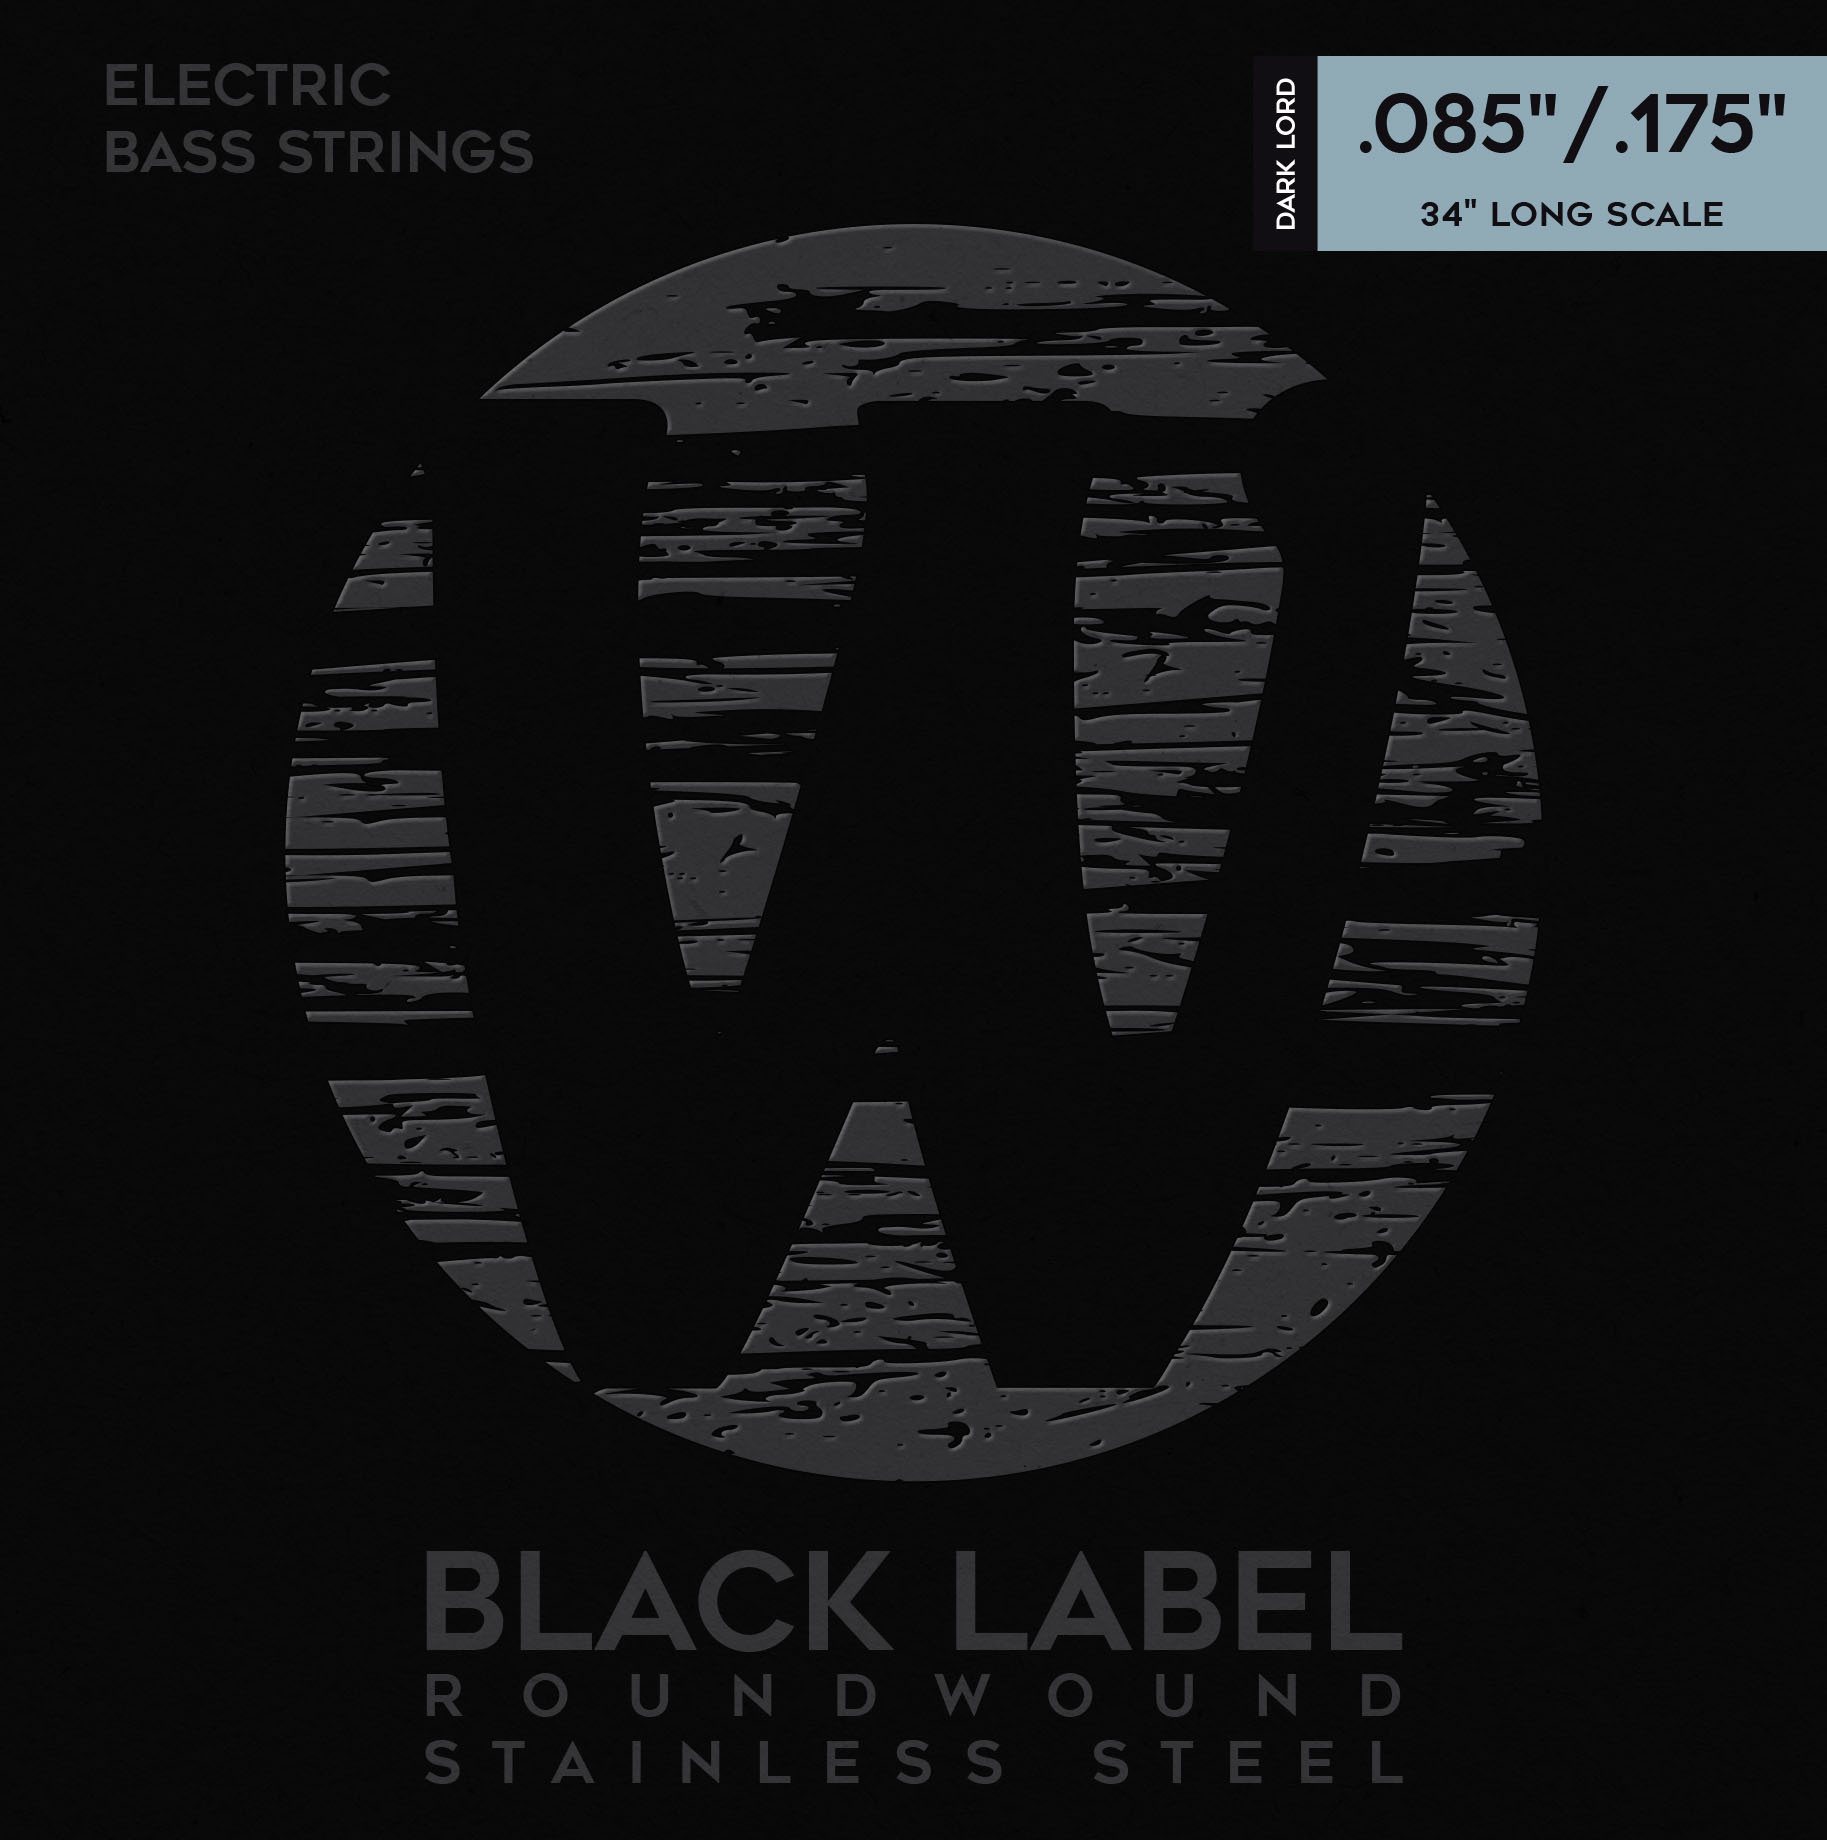 Warwick Black Label Bass String Set, Stainless Steel - 4-String, Dark Lord, .085-.175